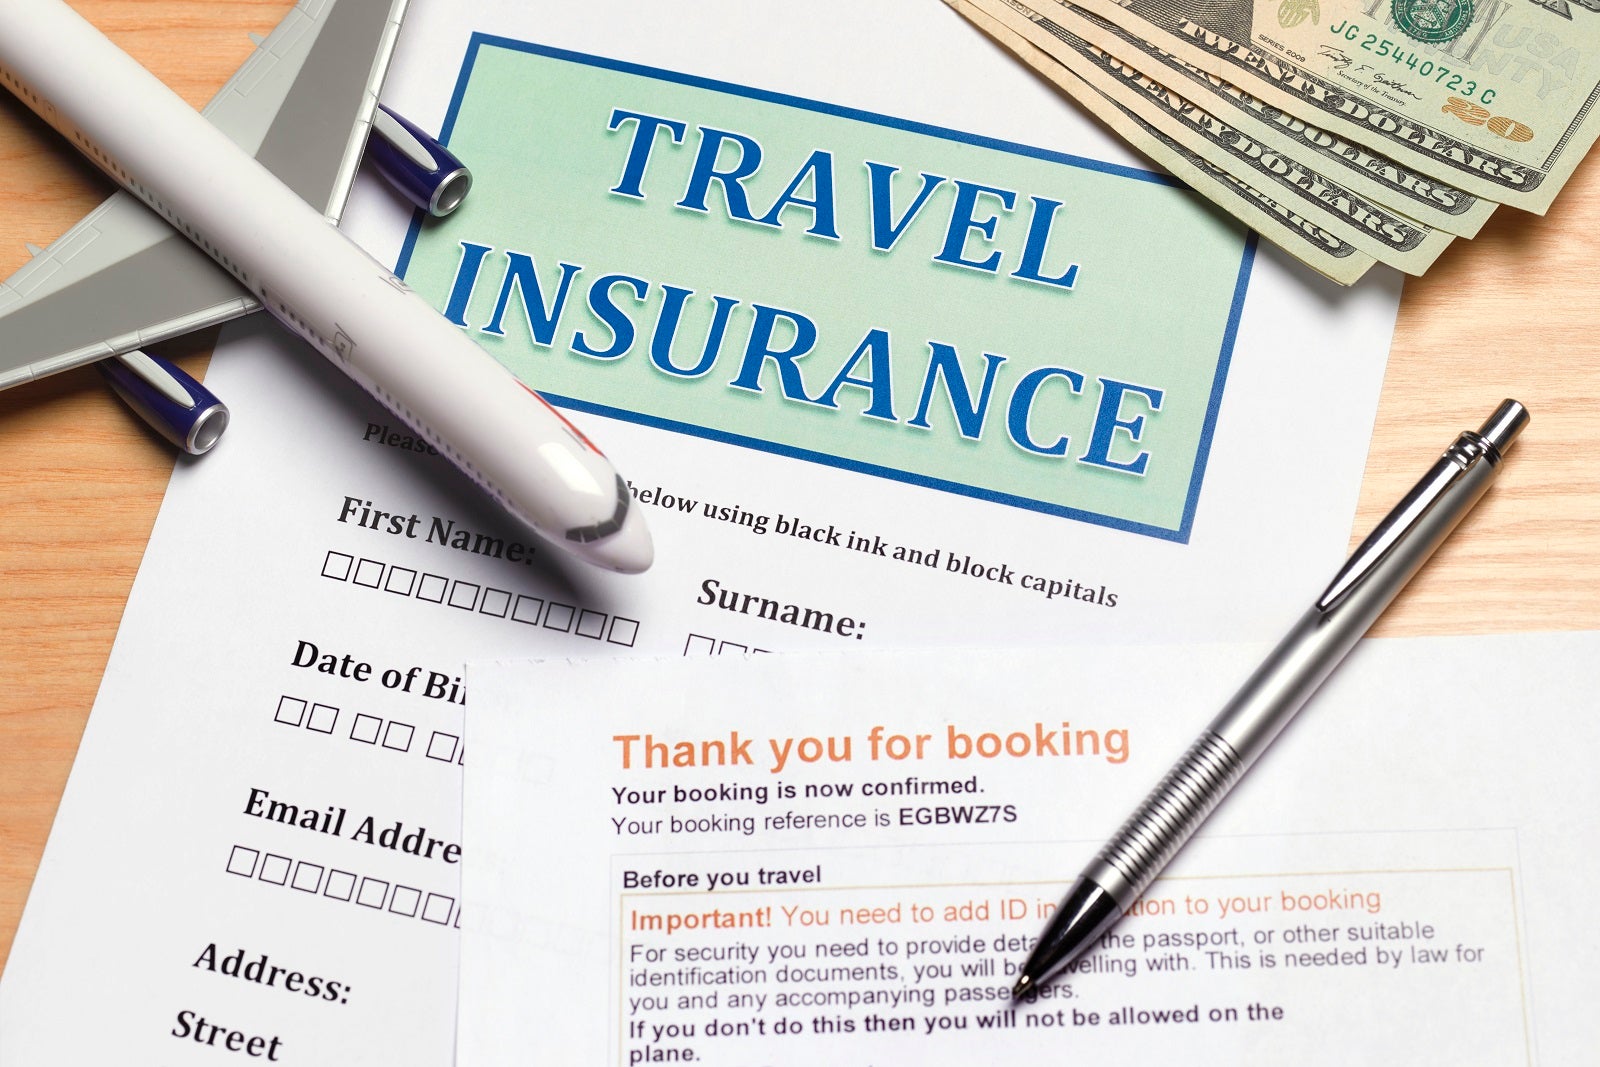 td annual travel insurance